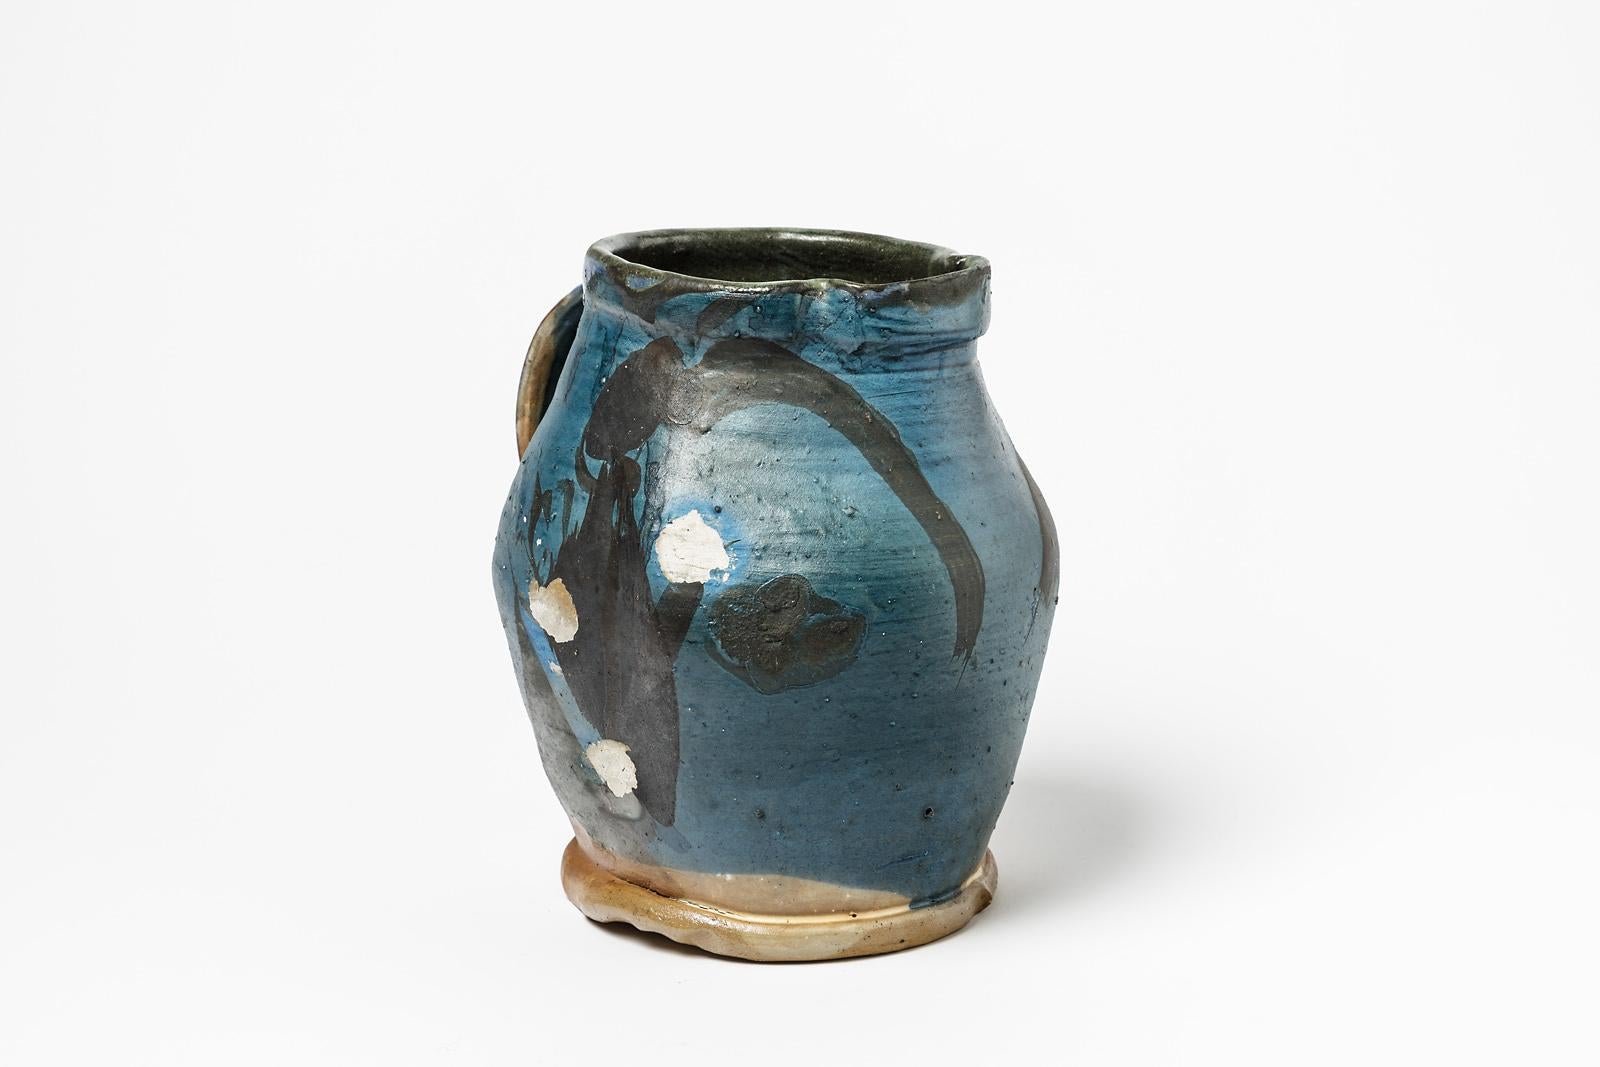 Michel lanos

Original mid-century abstract ceramic pitcher or vase

Blue and black ceramic glaze decoration

Original perfect condition

Measures: Height: 21cm, large: 18cm.